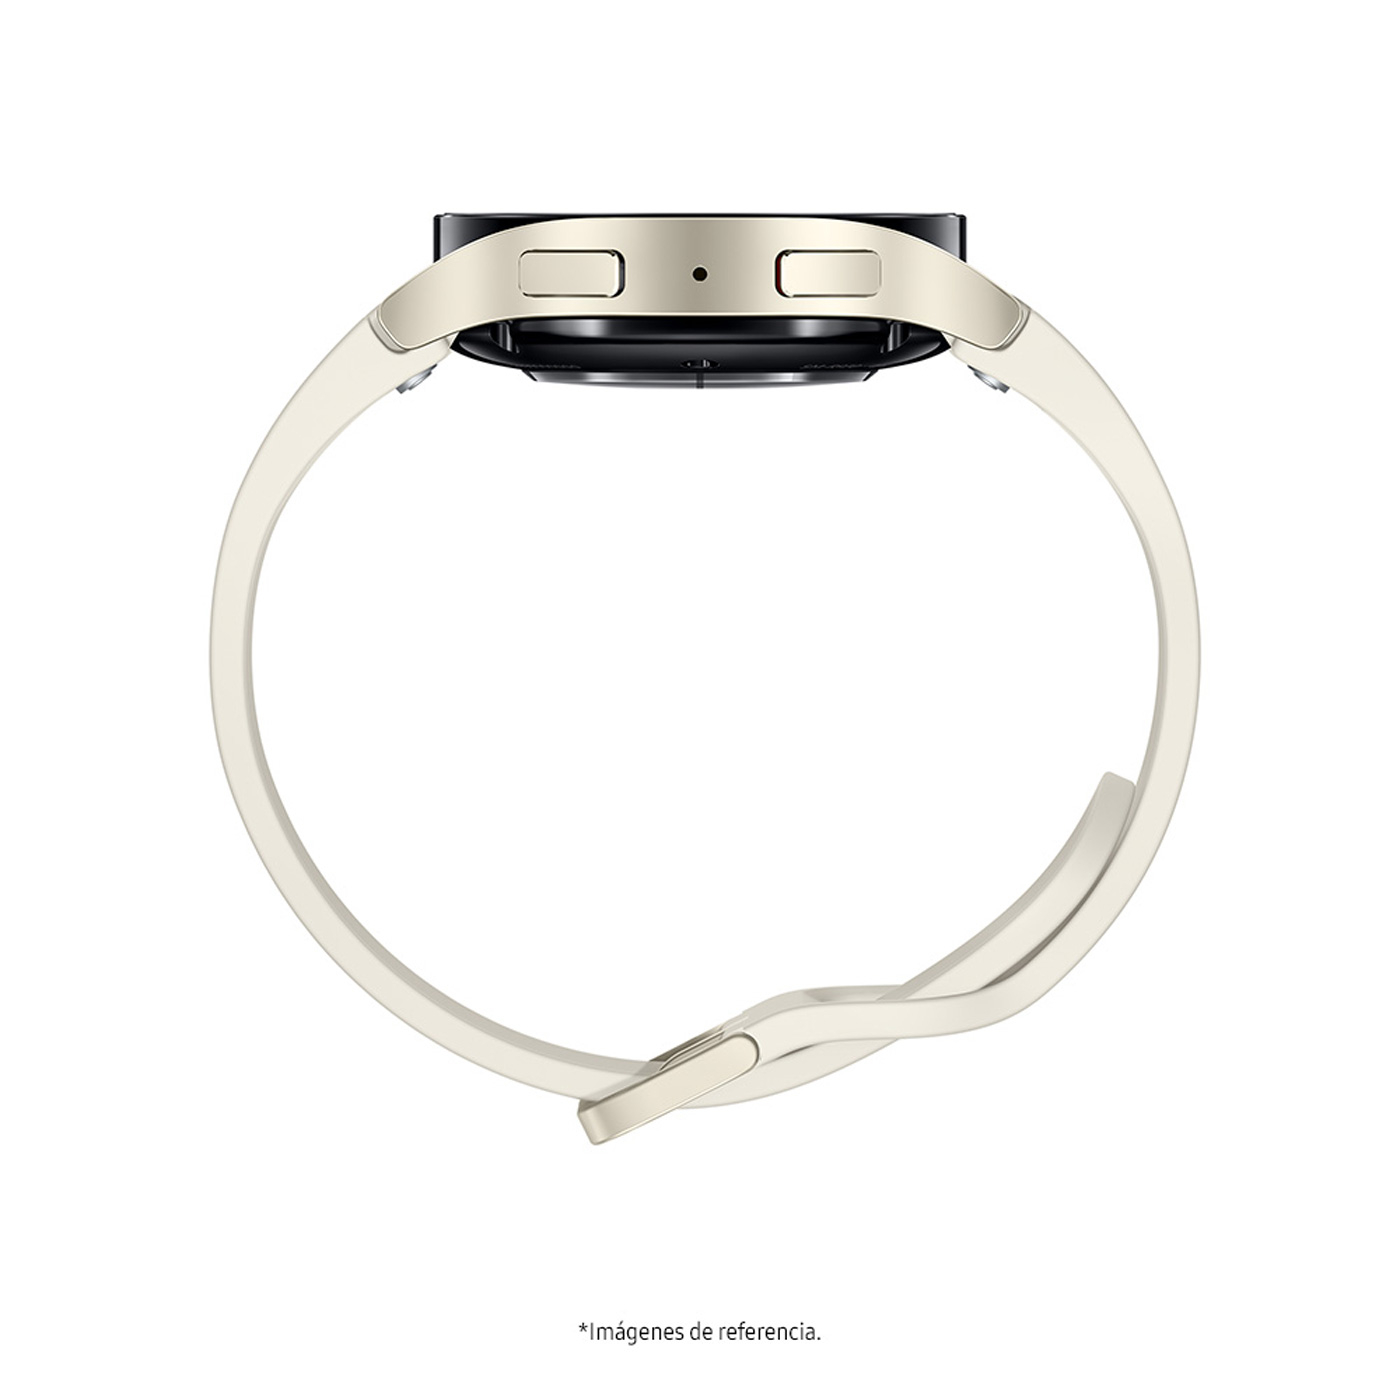 Samsung Galaxy Watch Series 6 – 40mm Aluminum Smartwatch - White Gold